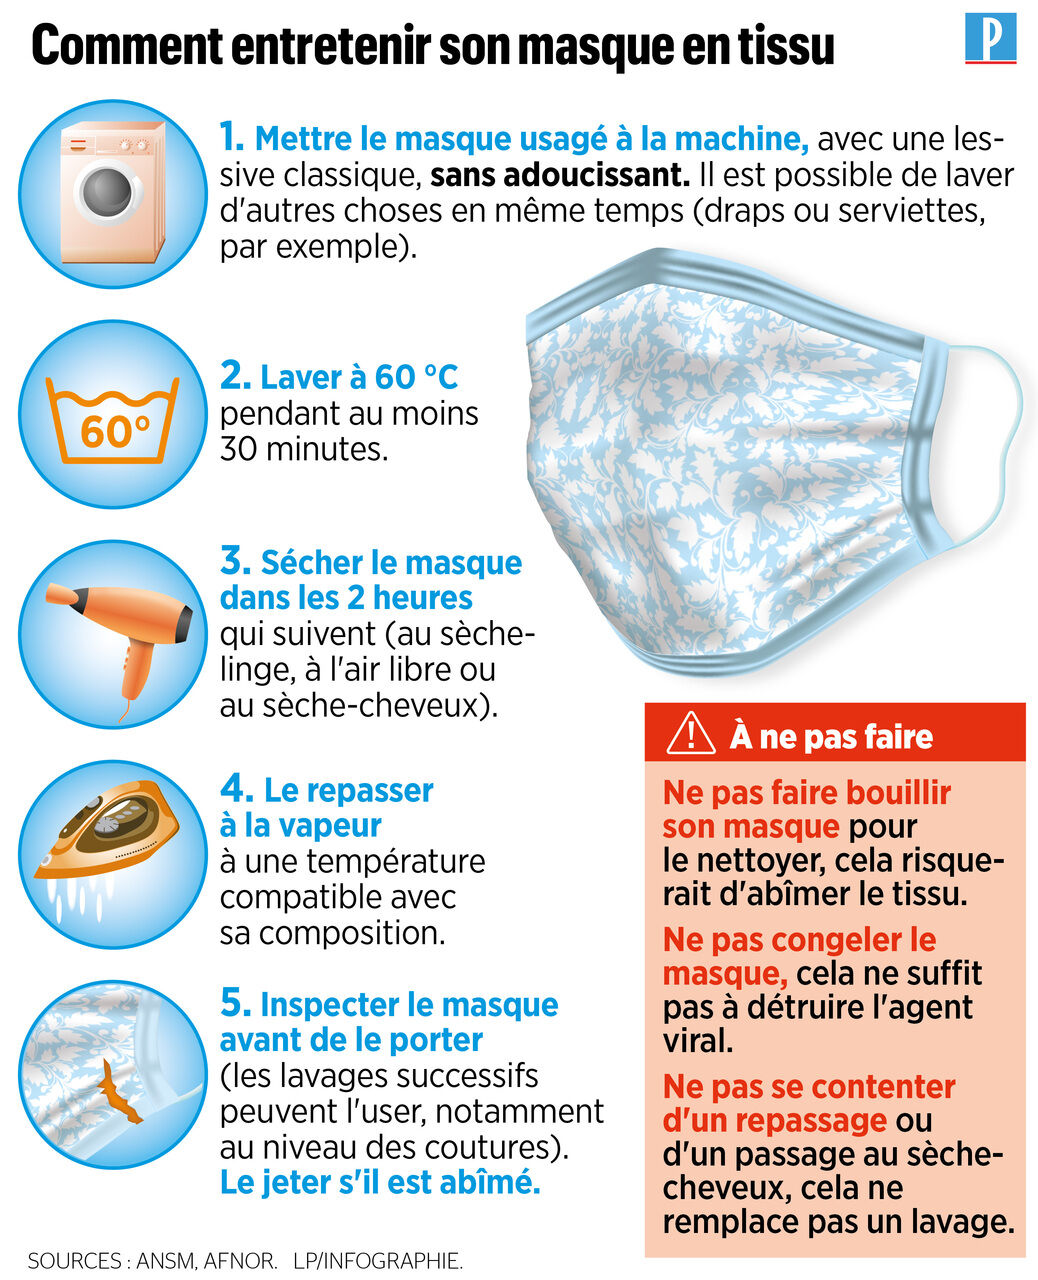 Coronavirus : on peut laver son masque chirurgical - France Bleu